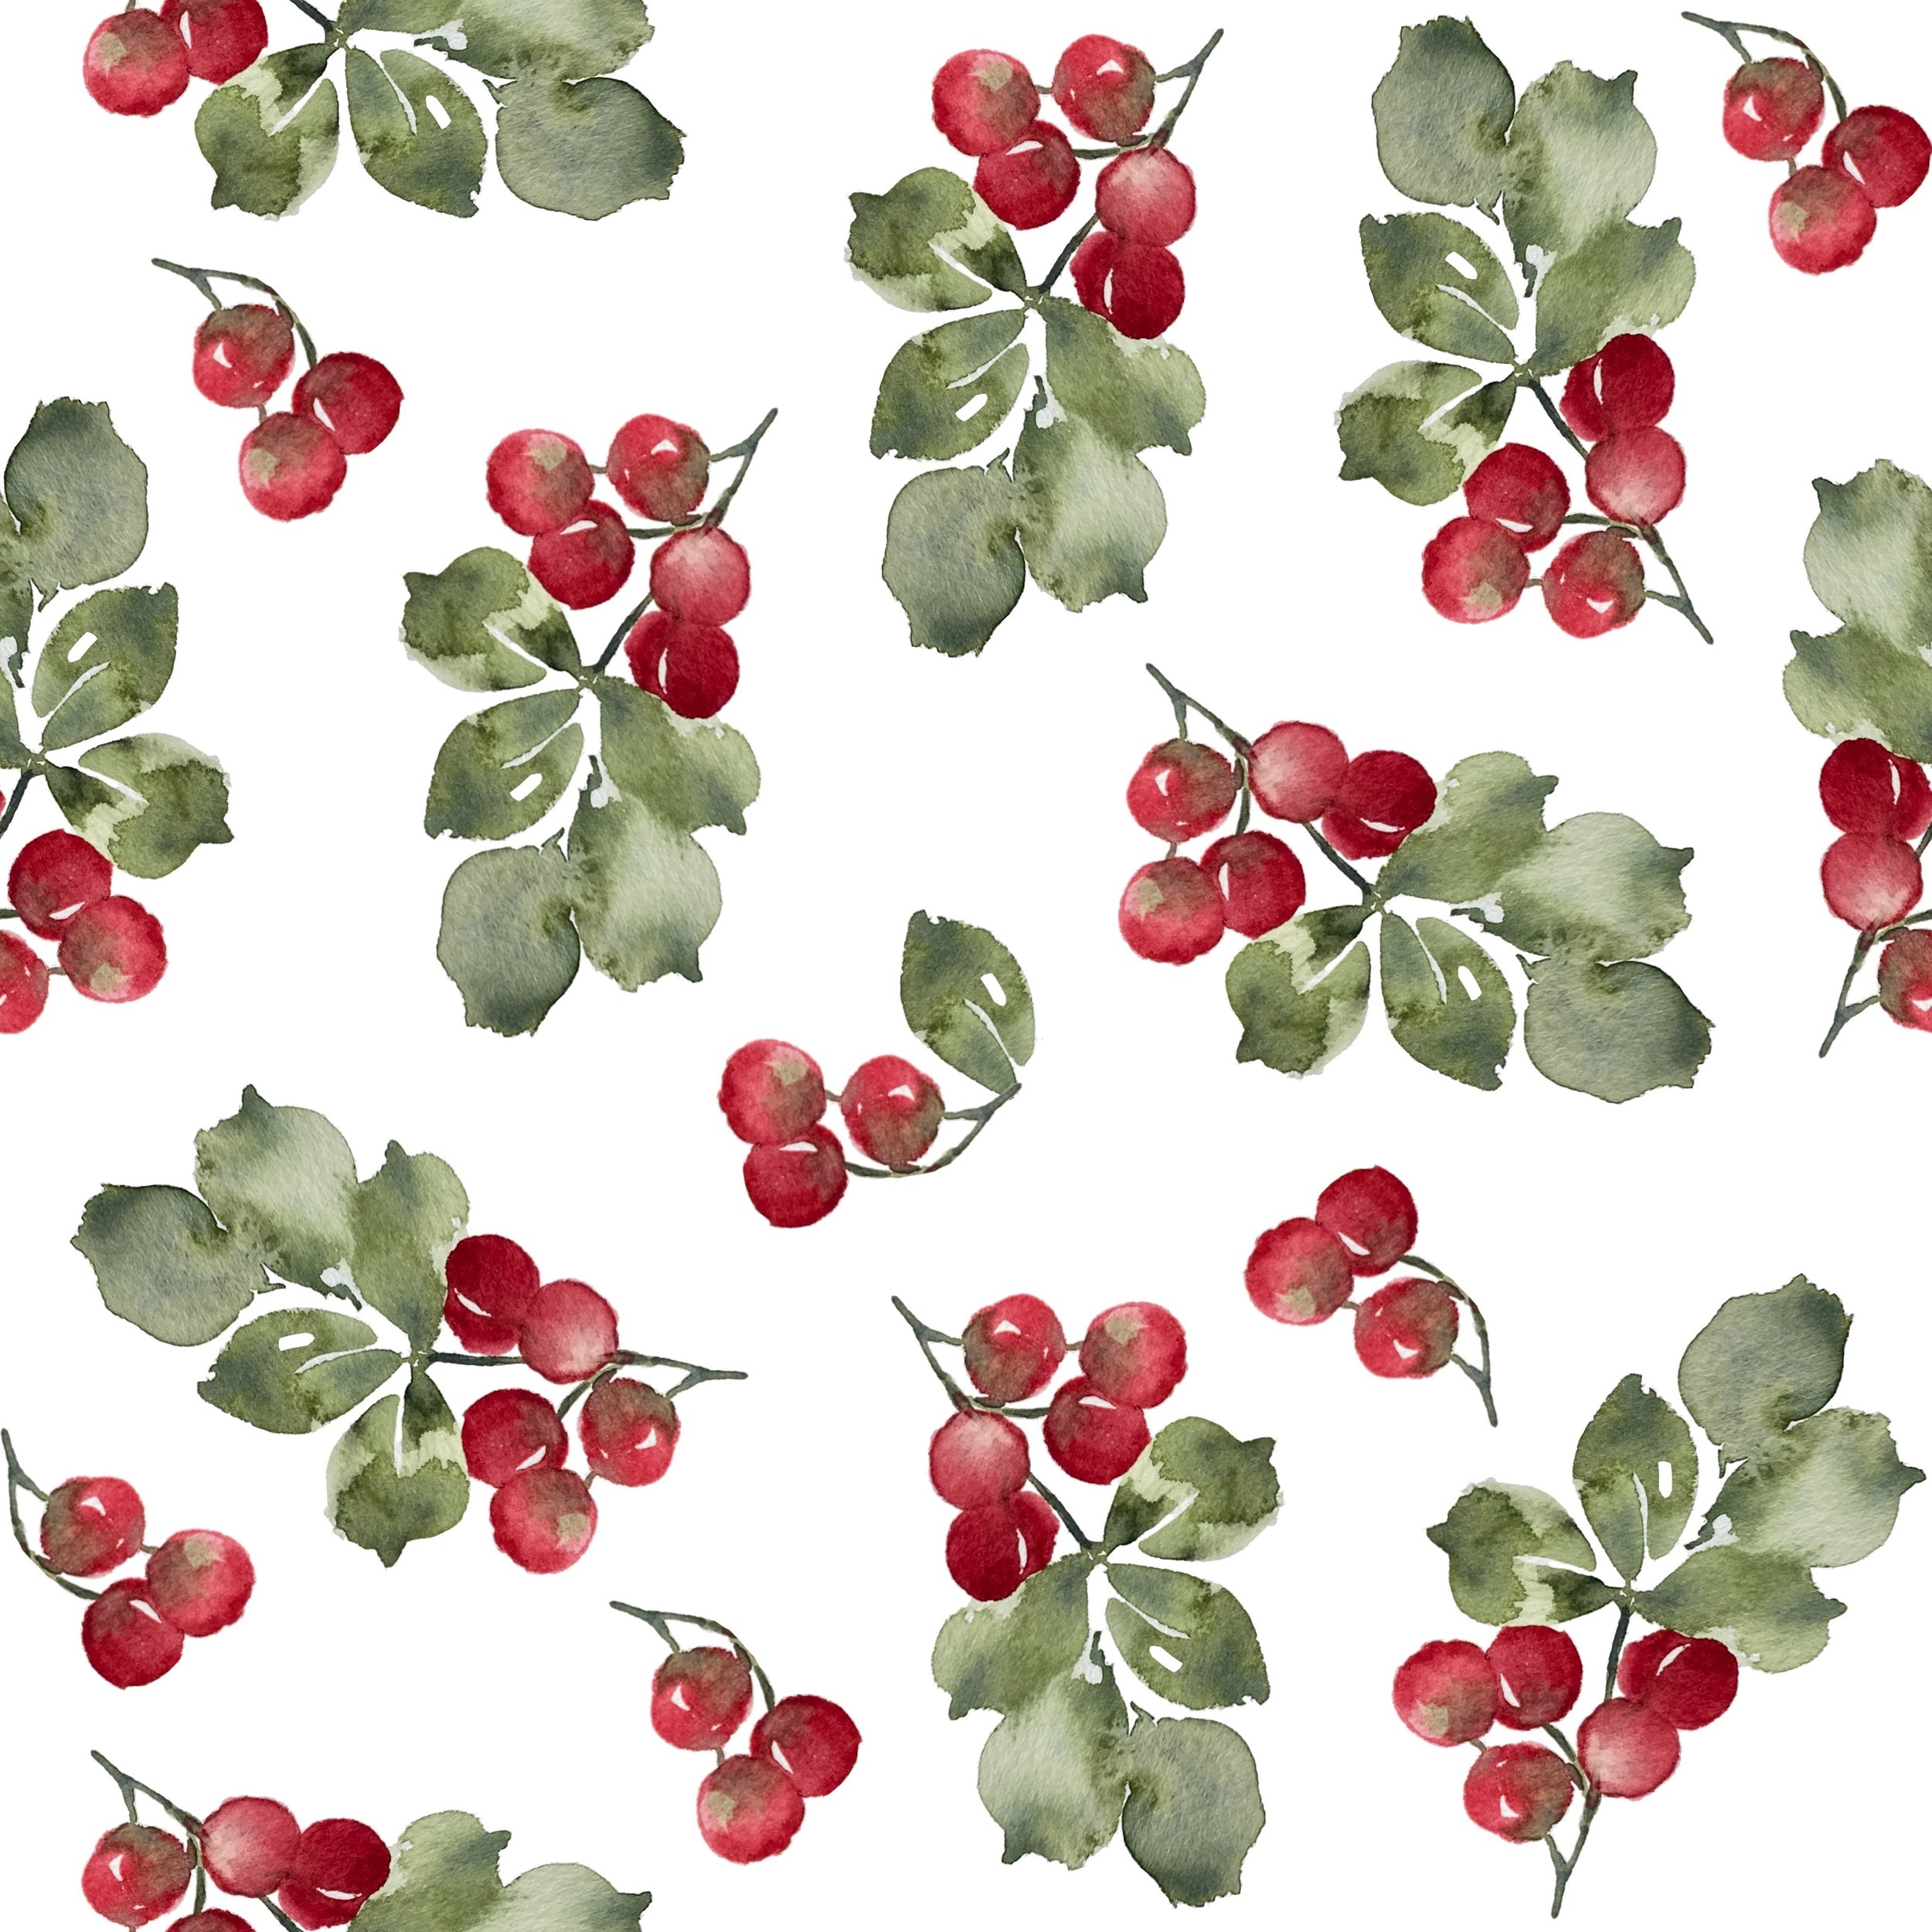 Mixed berry Monday! 🍒🍃🍒🍃🍒
&hellip;
&hellip;
#cherry #berry #leavesandberries #watercolor #pattern #surfacepatterndesign #surfacedesign #surfacedesign #patterndesign #patternplay #berrypattern #watercolor #watercolorpattern #watercolorberries #wa